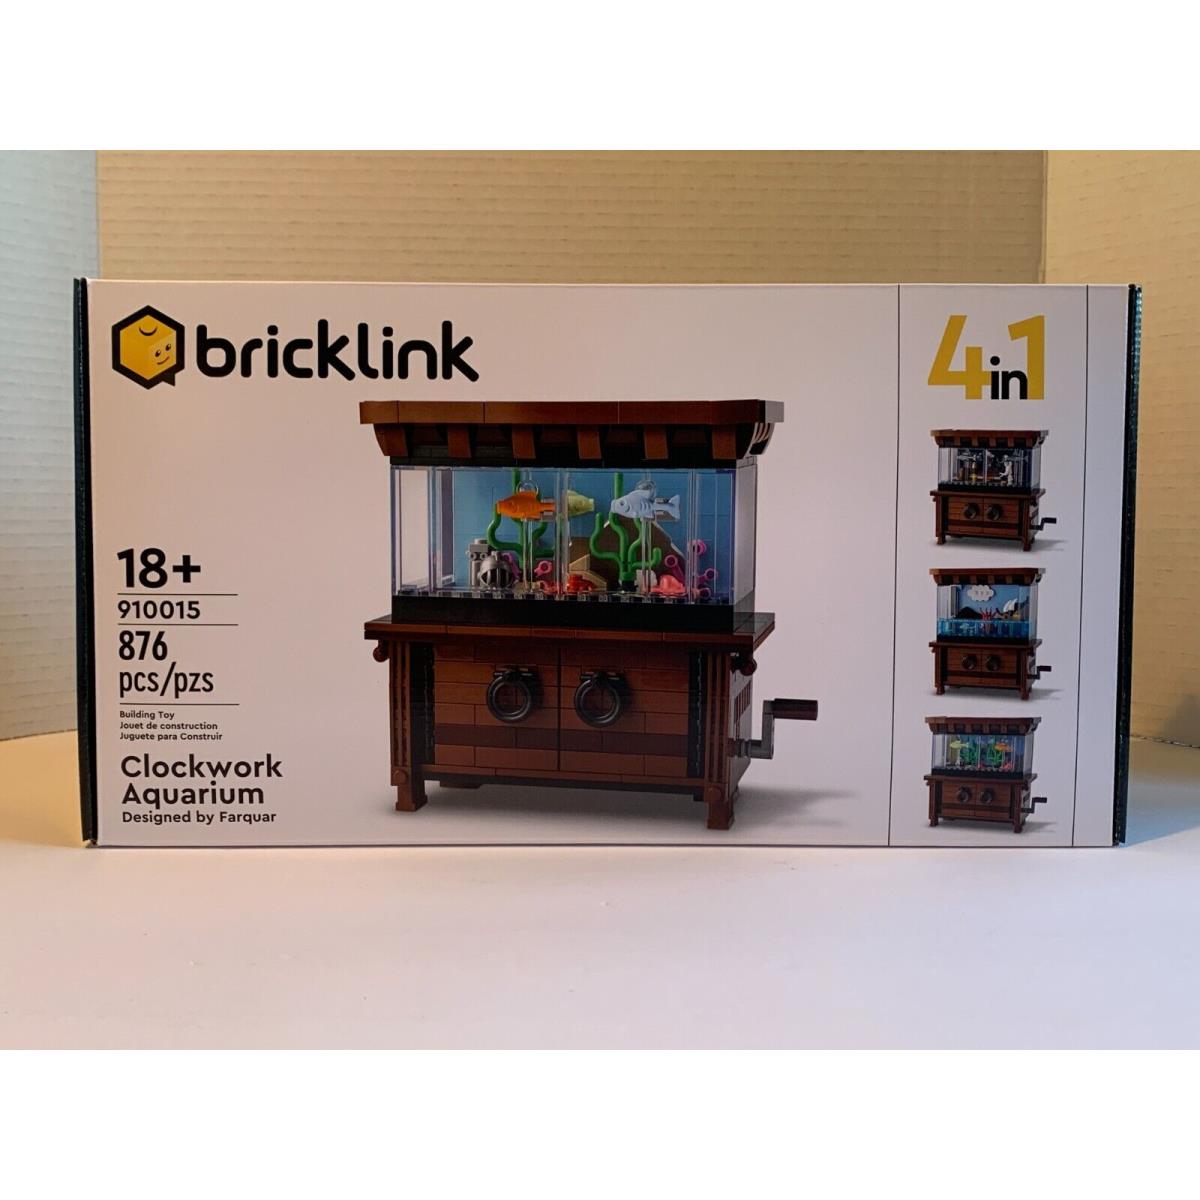 Lego Bricklink: Clockwork Aquarium 910015 in Box Limited